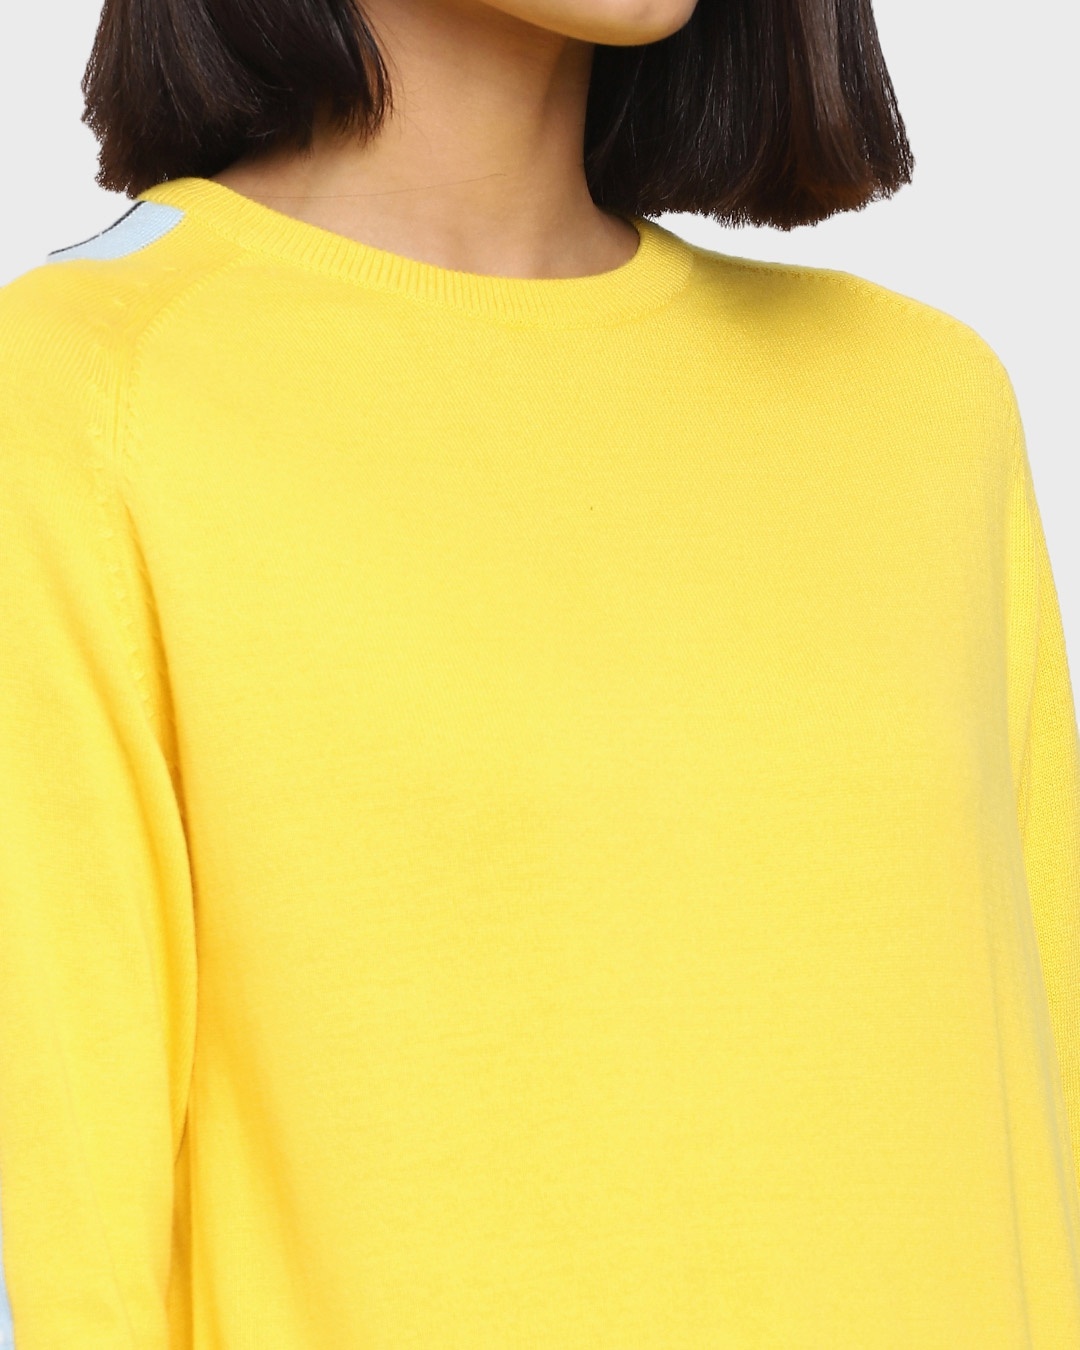 Shop Women's Yellow Flat Knit Sweater